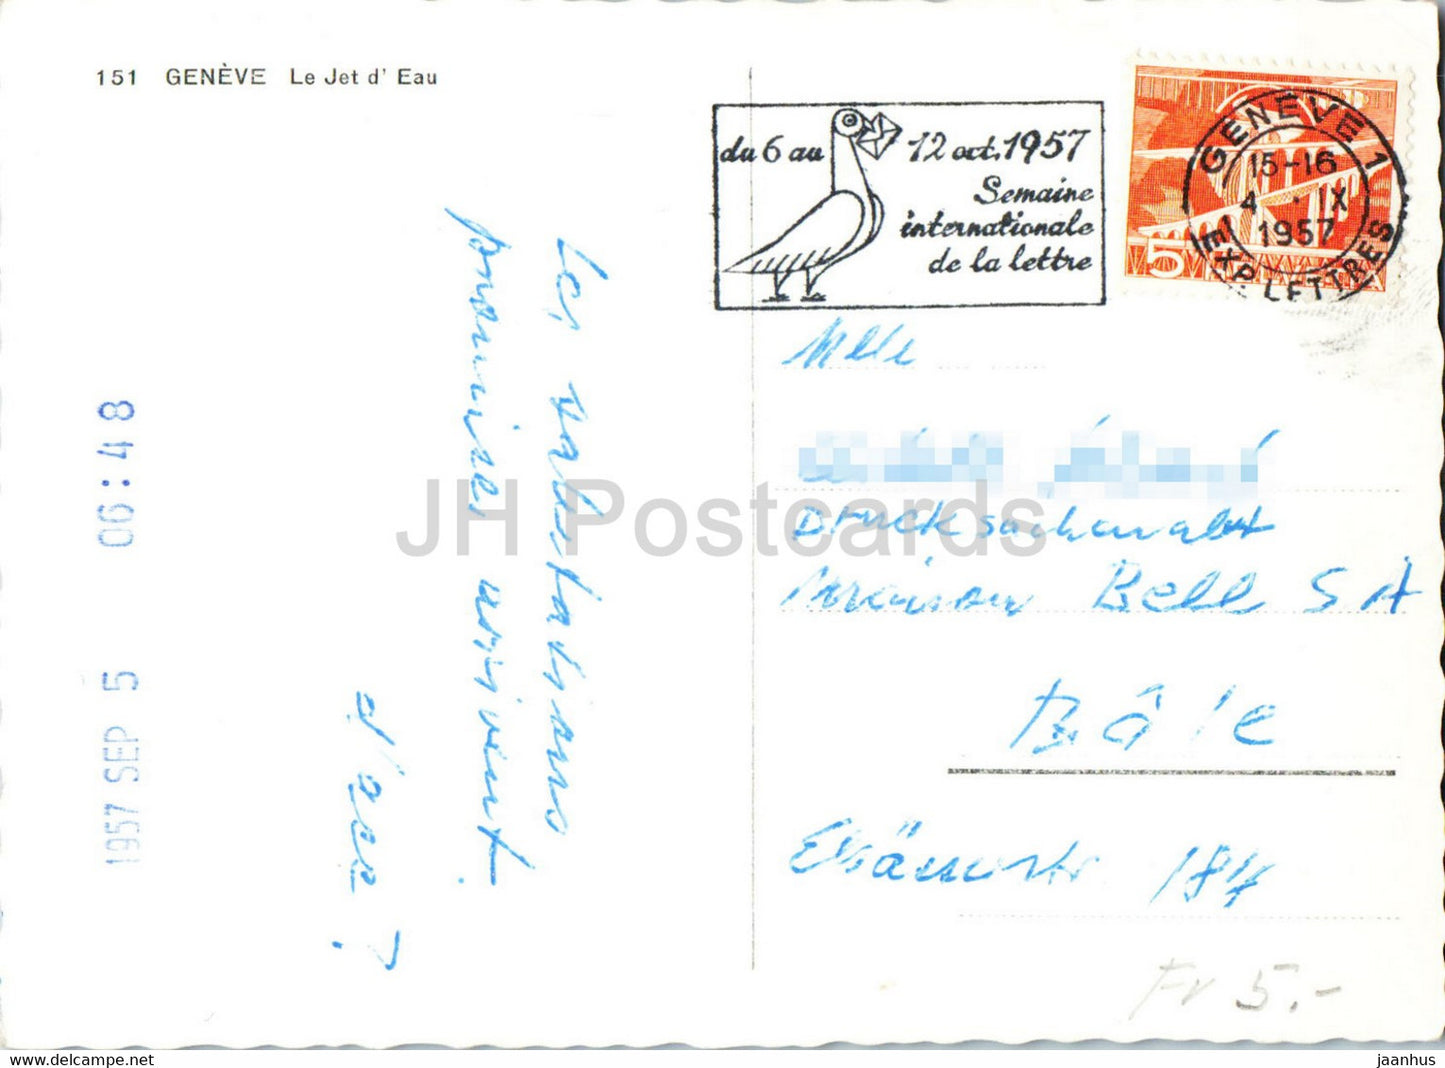 Genf - Le Jet d' Eau - Schiff - 151 - alte Postkarte - 1957 - Schweiz - gebraucht